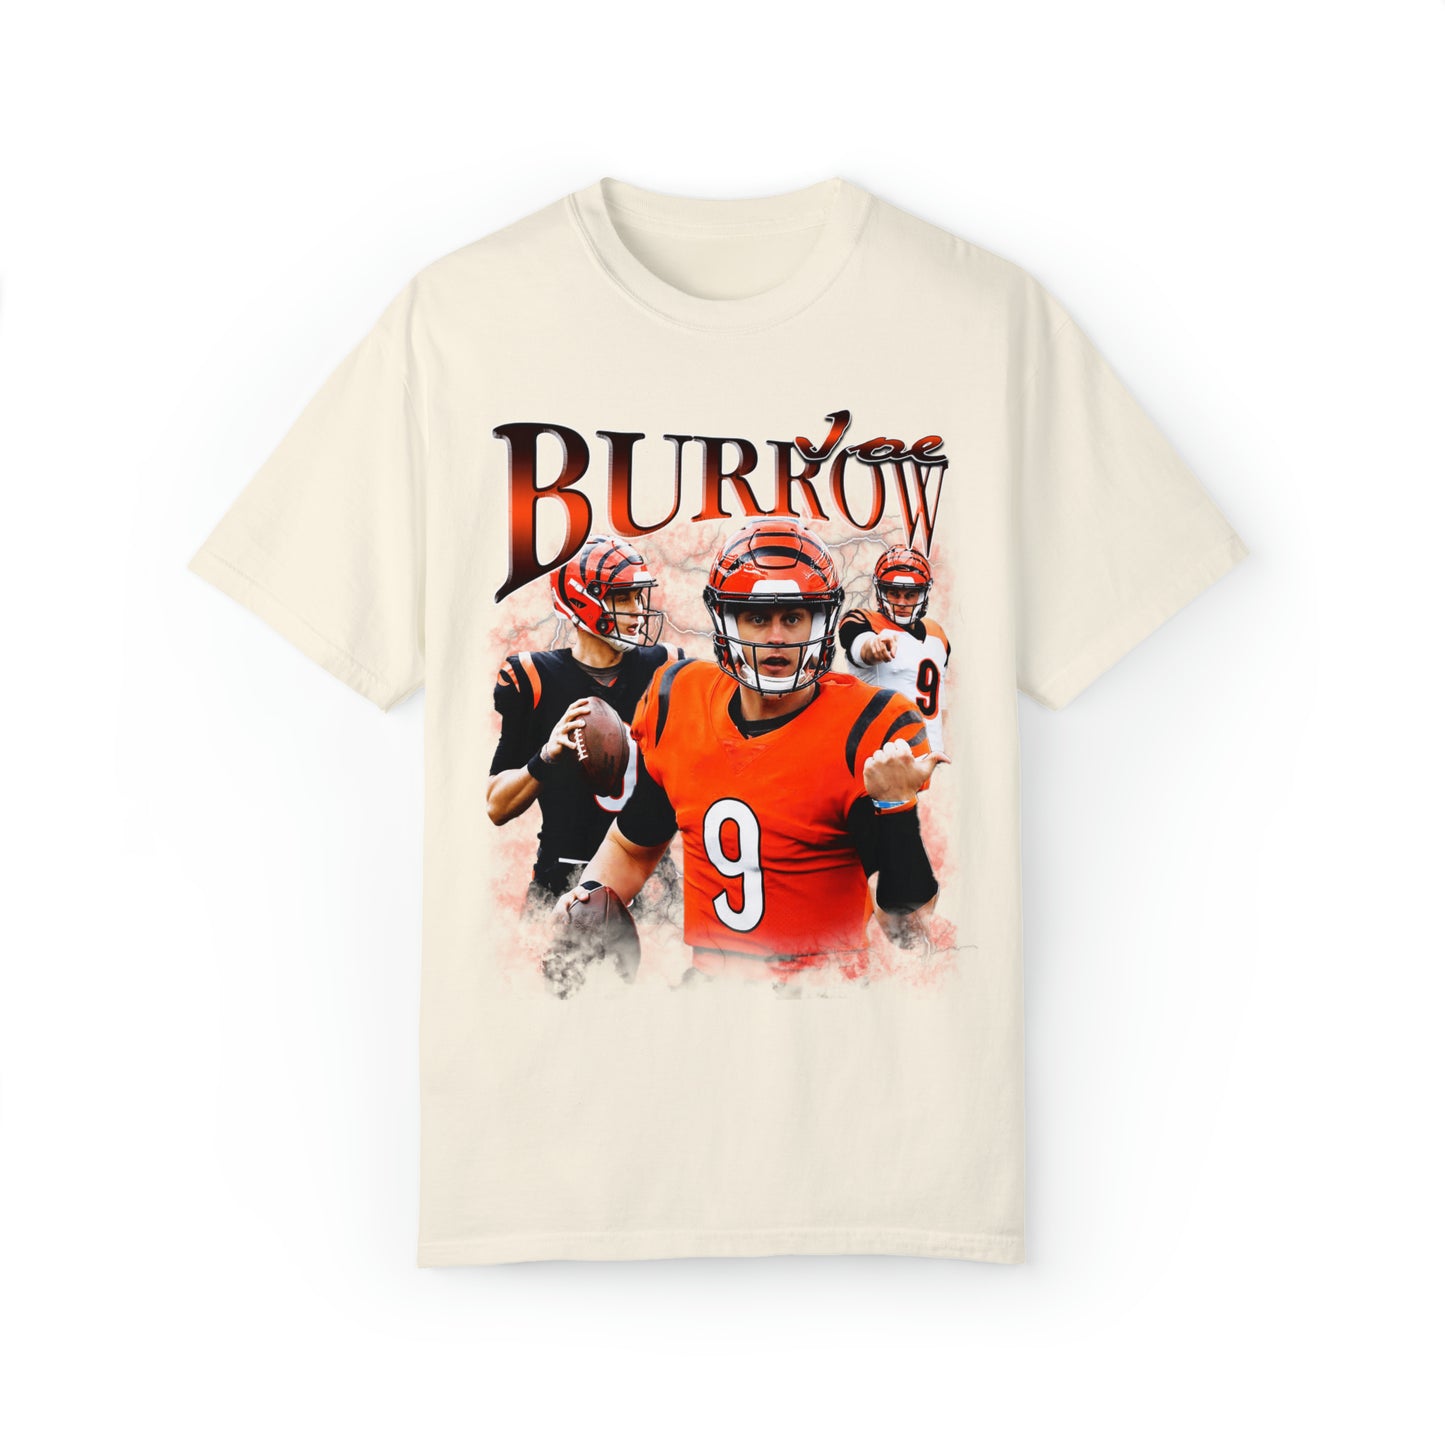 WIY x Burrow Vintage T-Shirt